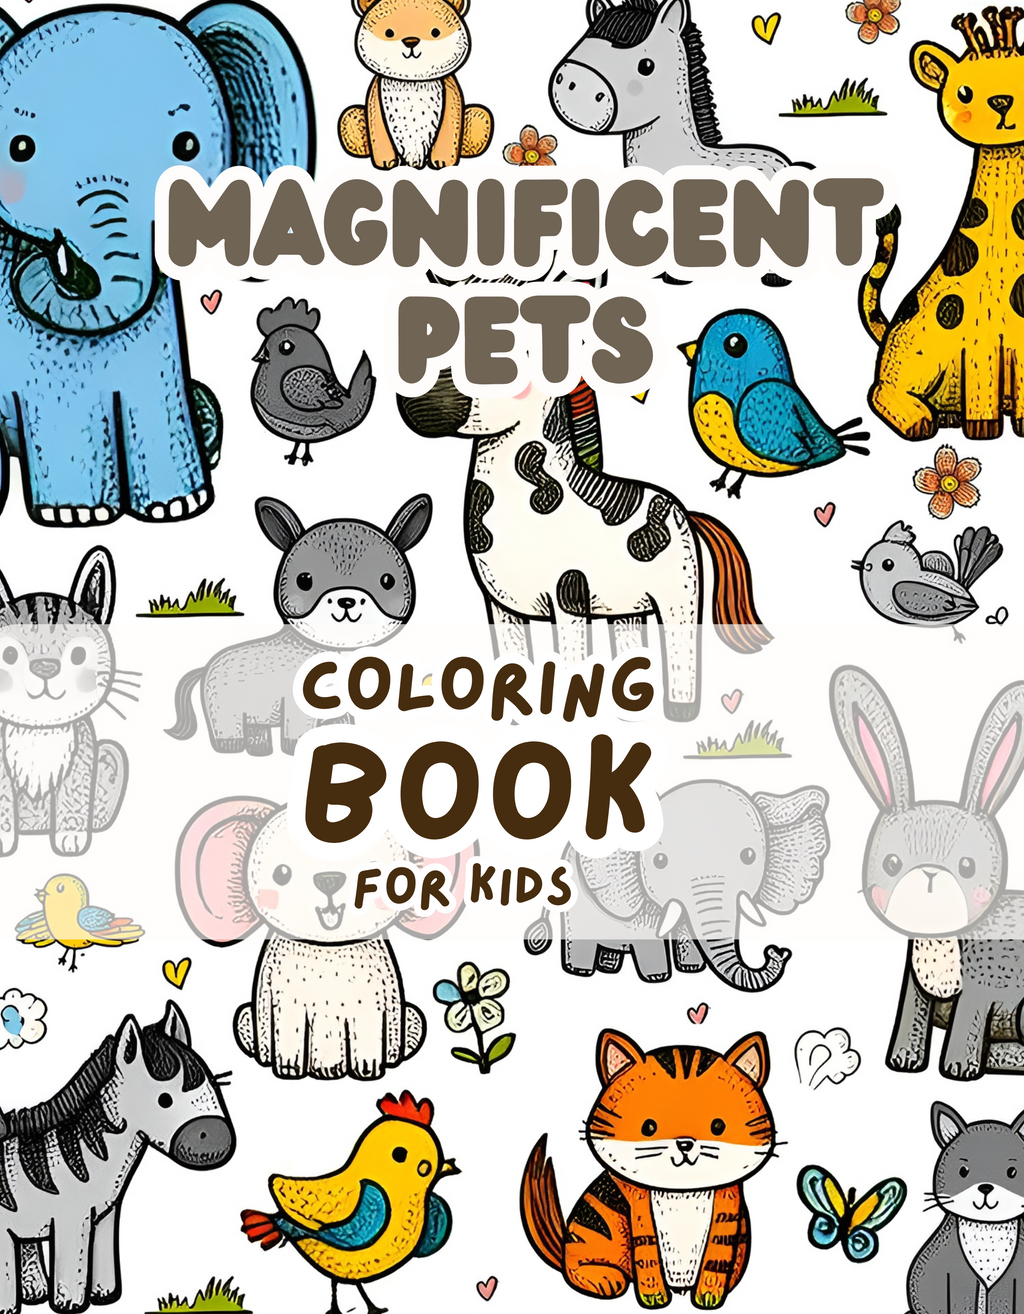 Magnificent Pets: Children’s Coloring Book